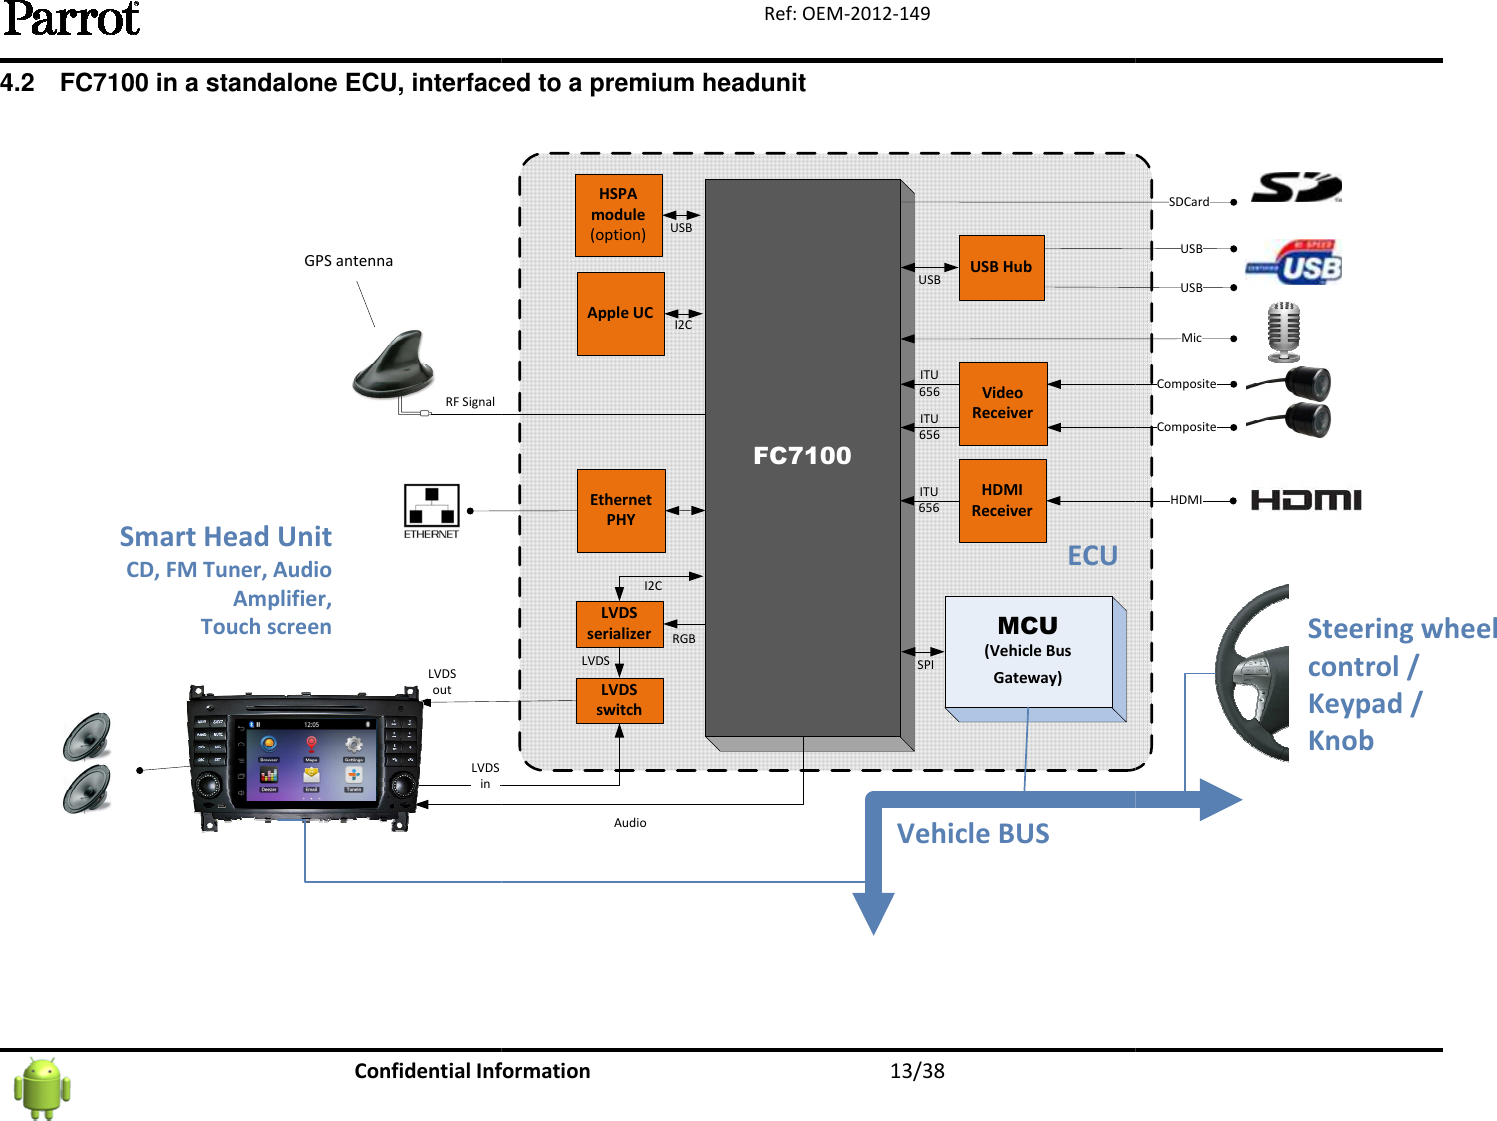   Confidential Information4.2 FC7100 in a standalone ECU, interfaced to a premium headunit LVDSoutLVDSinSmart Head UnitCD, FM Tuner, Audio Amplifier,Touch screenRF SignalGPS antennaInformation  13/38 Ref: OEM-2012-149 FC7100 in a standalone ECU, interfaced to a premium headunit FC7100LVDS switchUSB HubMCU(Vehicle Bus Gateway)HSPA module (option)Apple UCAudio Vehicle BUSSPIRGBI2CUSBUSBI2CLVDS serializerLVDSHDMI ReceiverITU 656Video ReceiverITU 656ITU 656Ethernet PHYECU   MicSDCardUSBUSBHDMICompositeCompositeSteering wheel control /Keypad /Knob